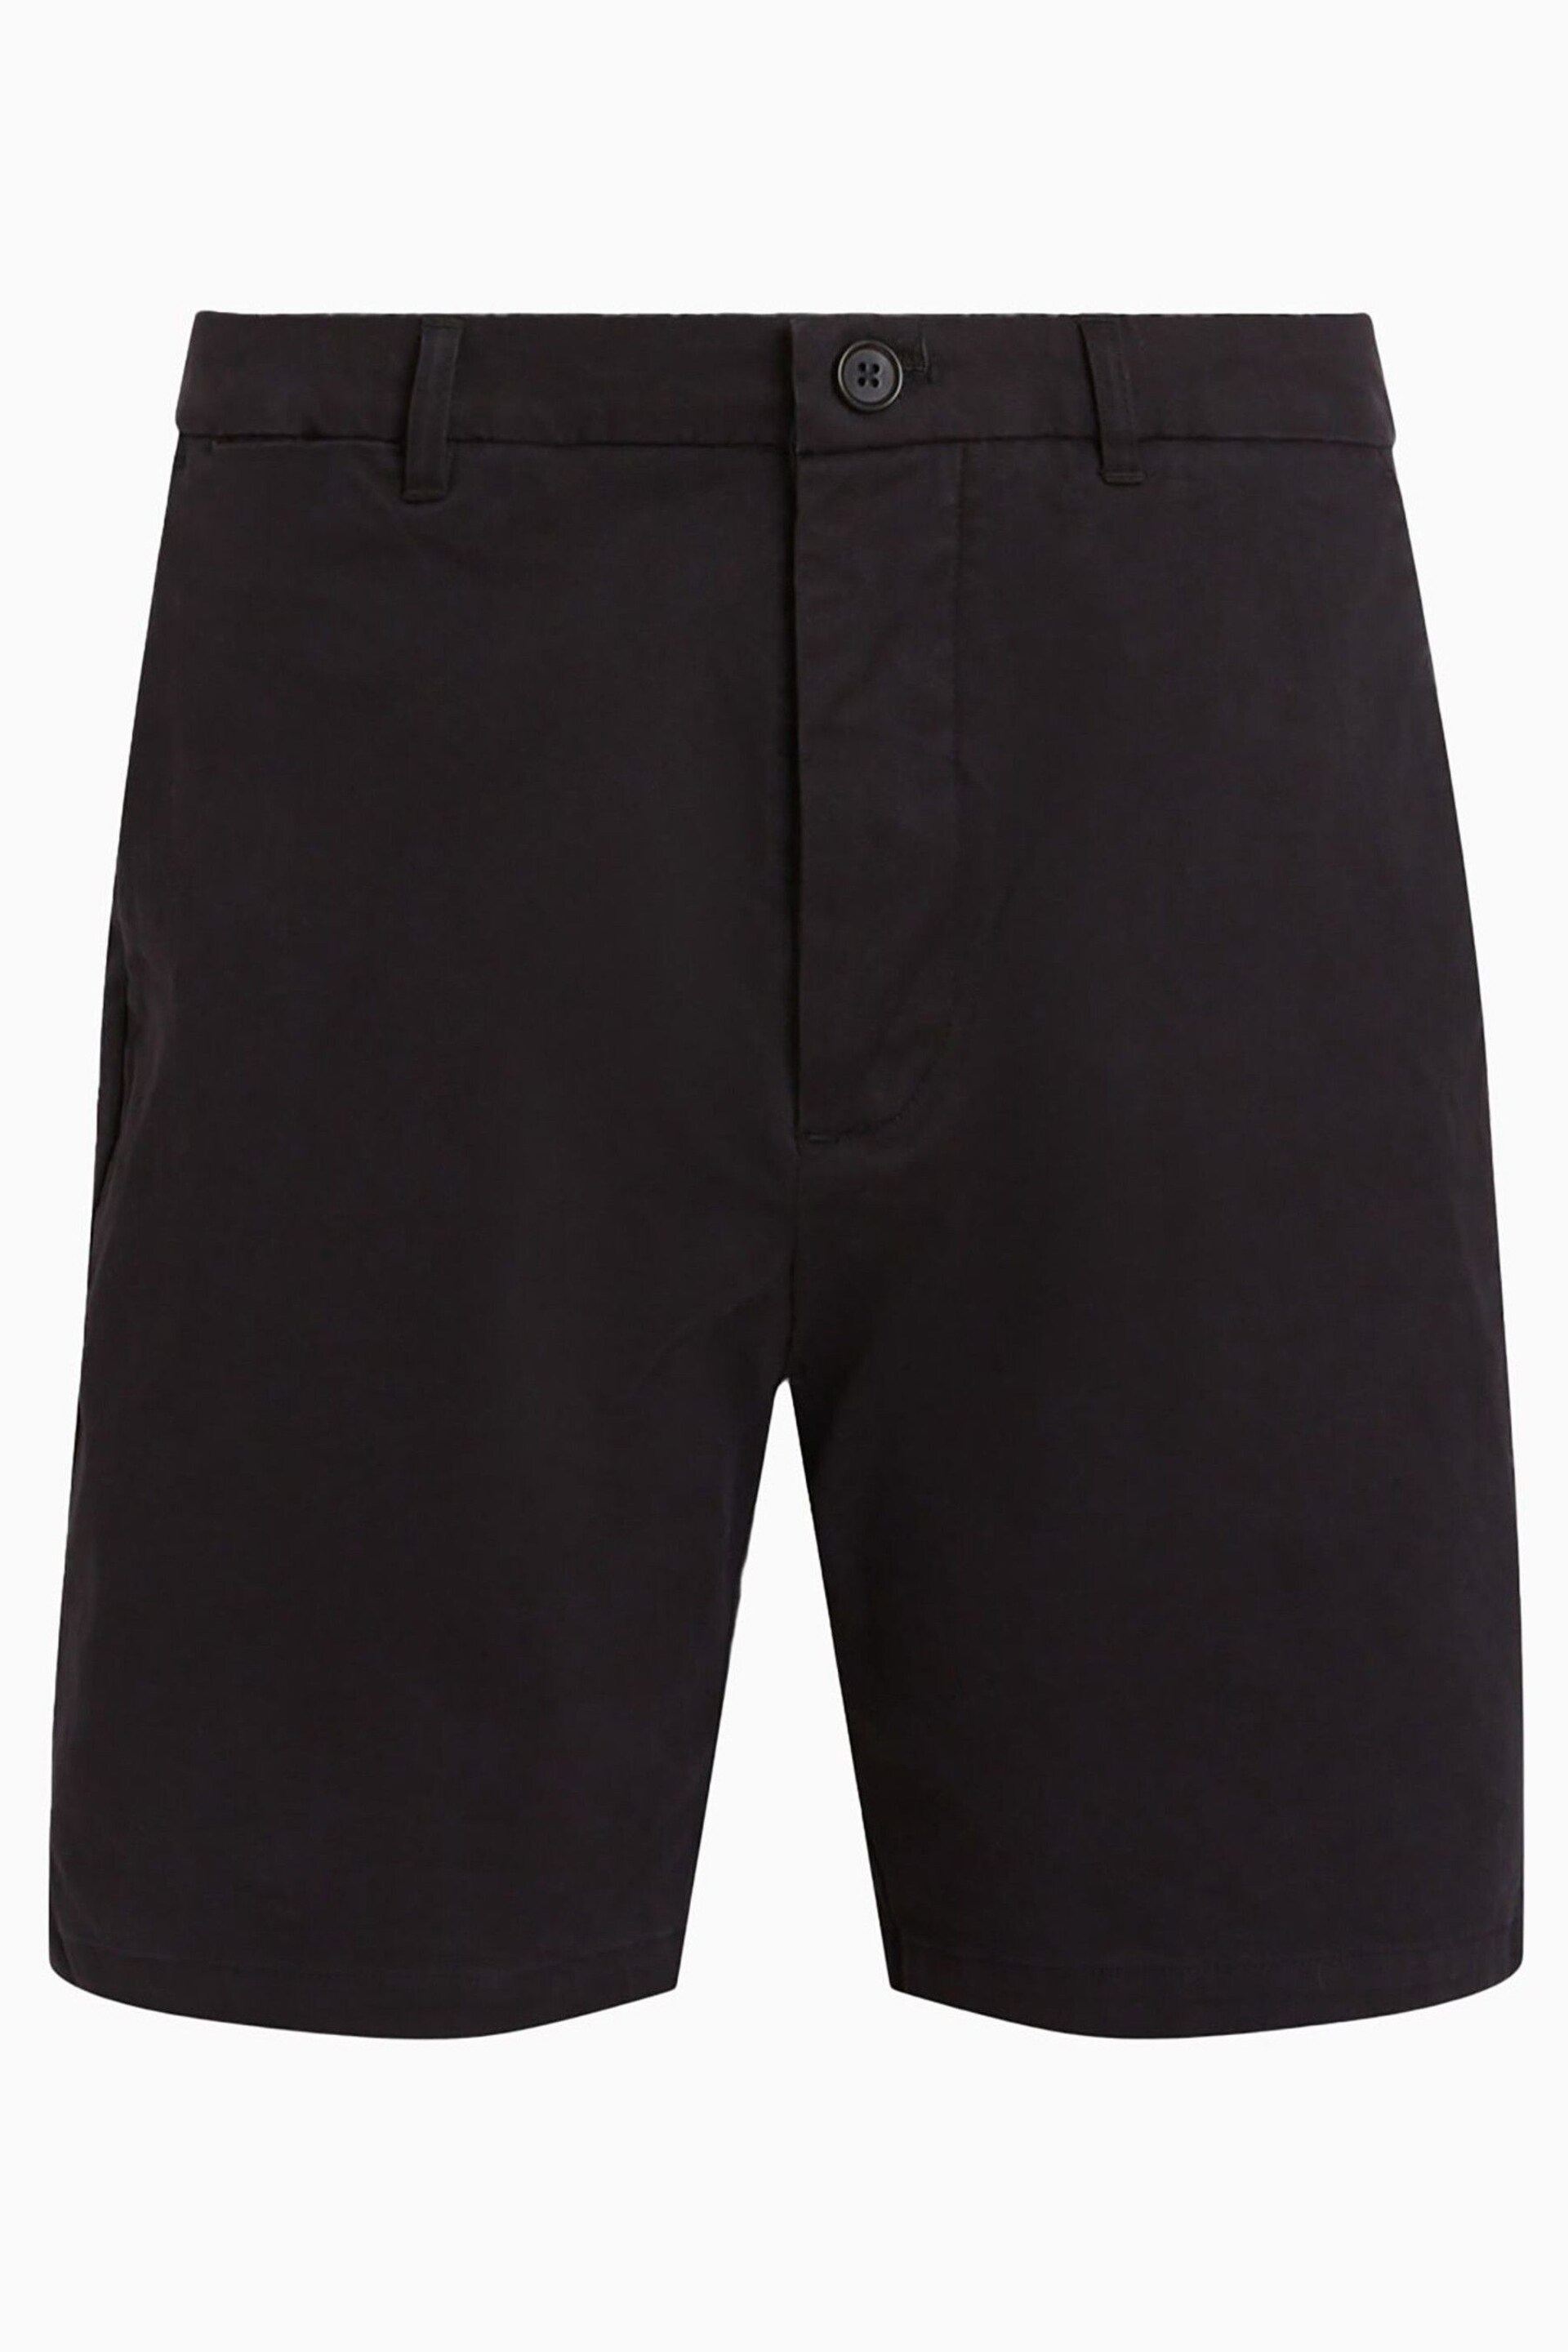 AllSaints Black Neiva Shorts - Image 7 of 7